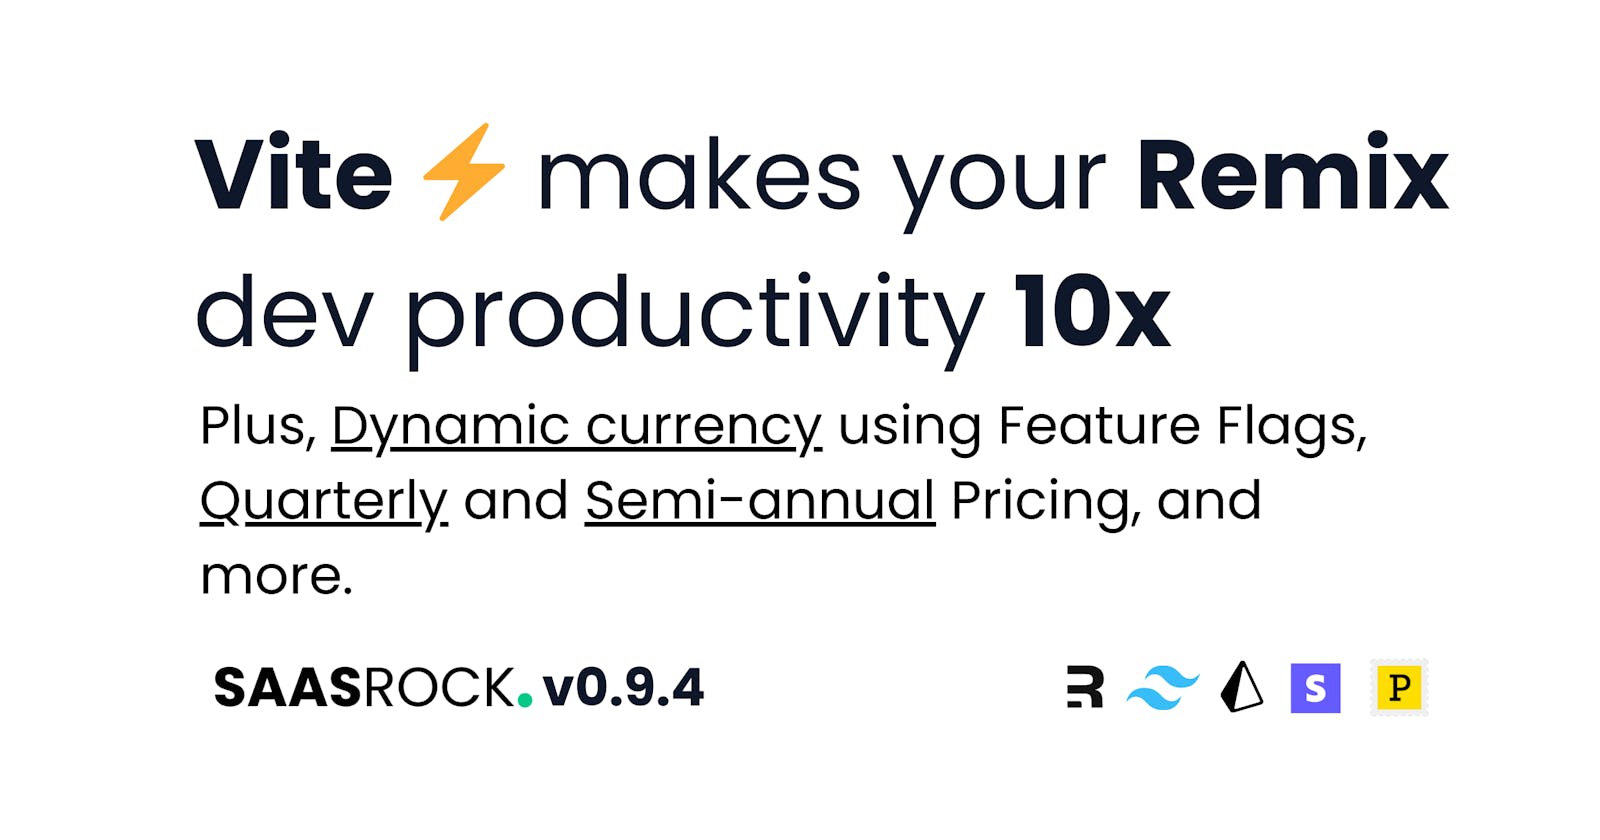 Vite makes your Remix dev productivity 10x in SaasRock v0.9.4